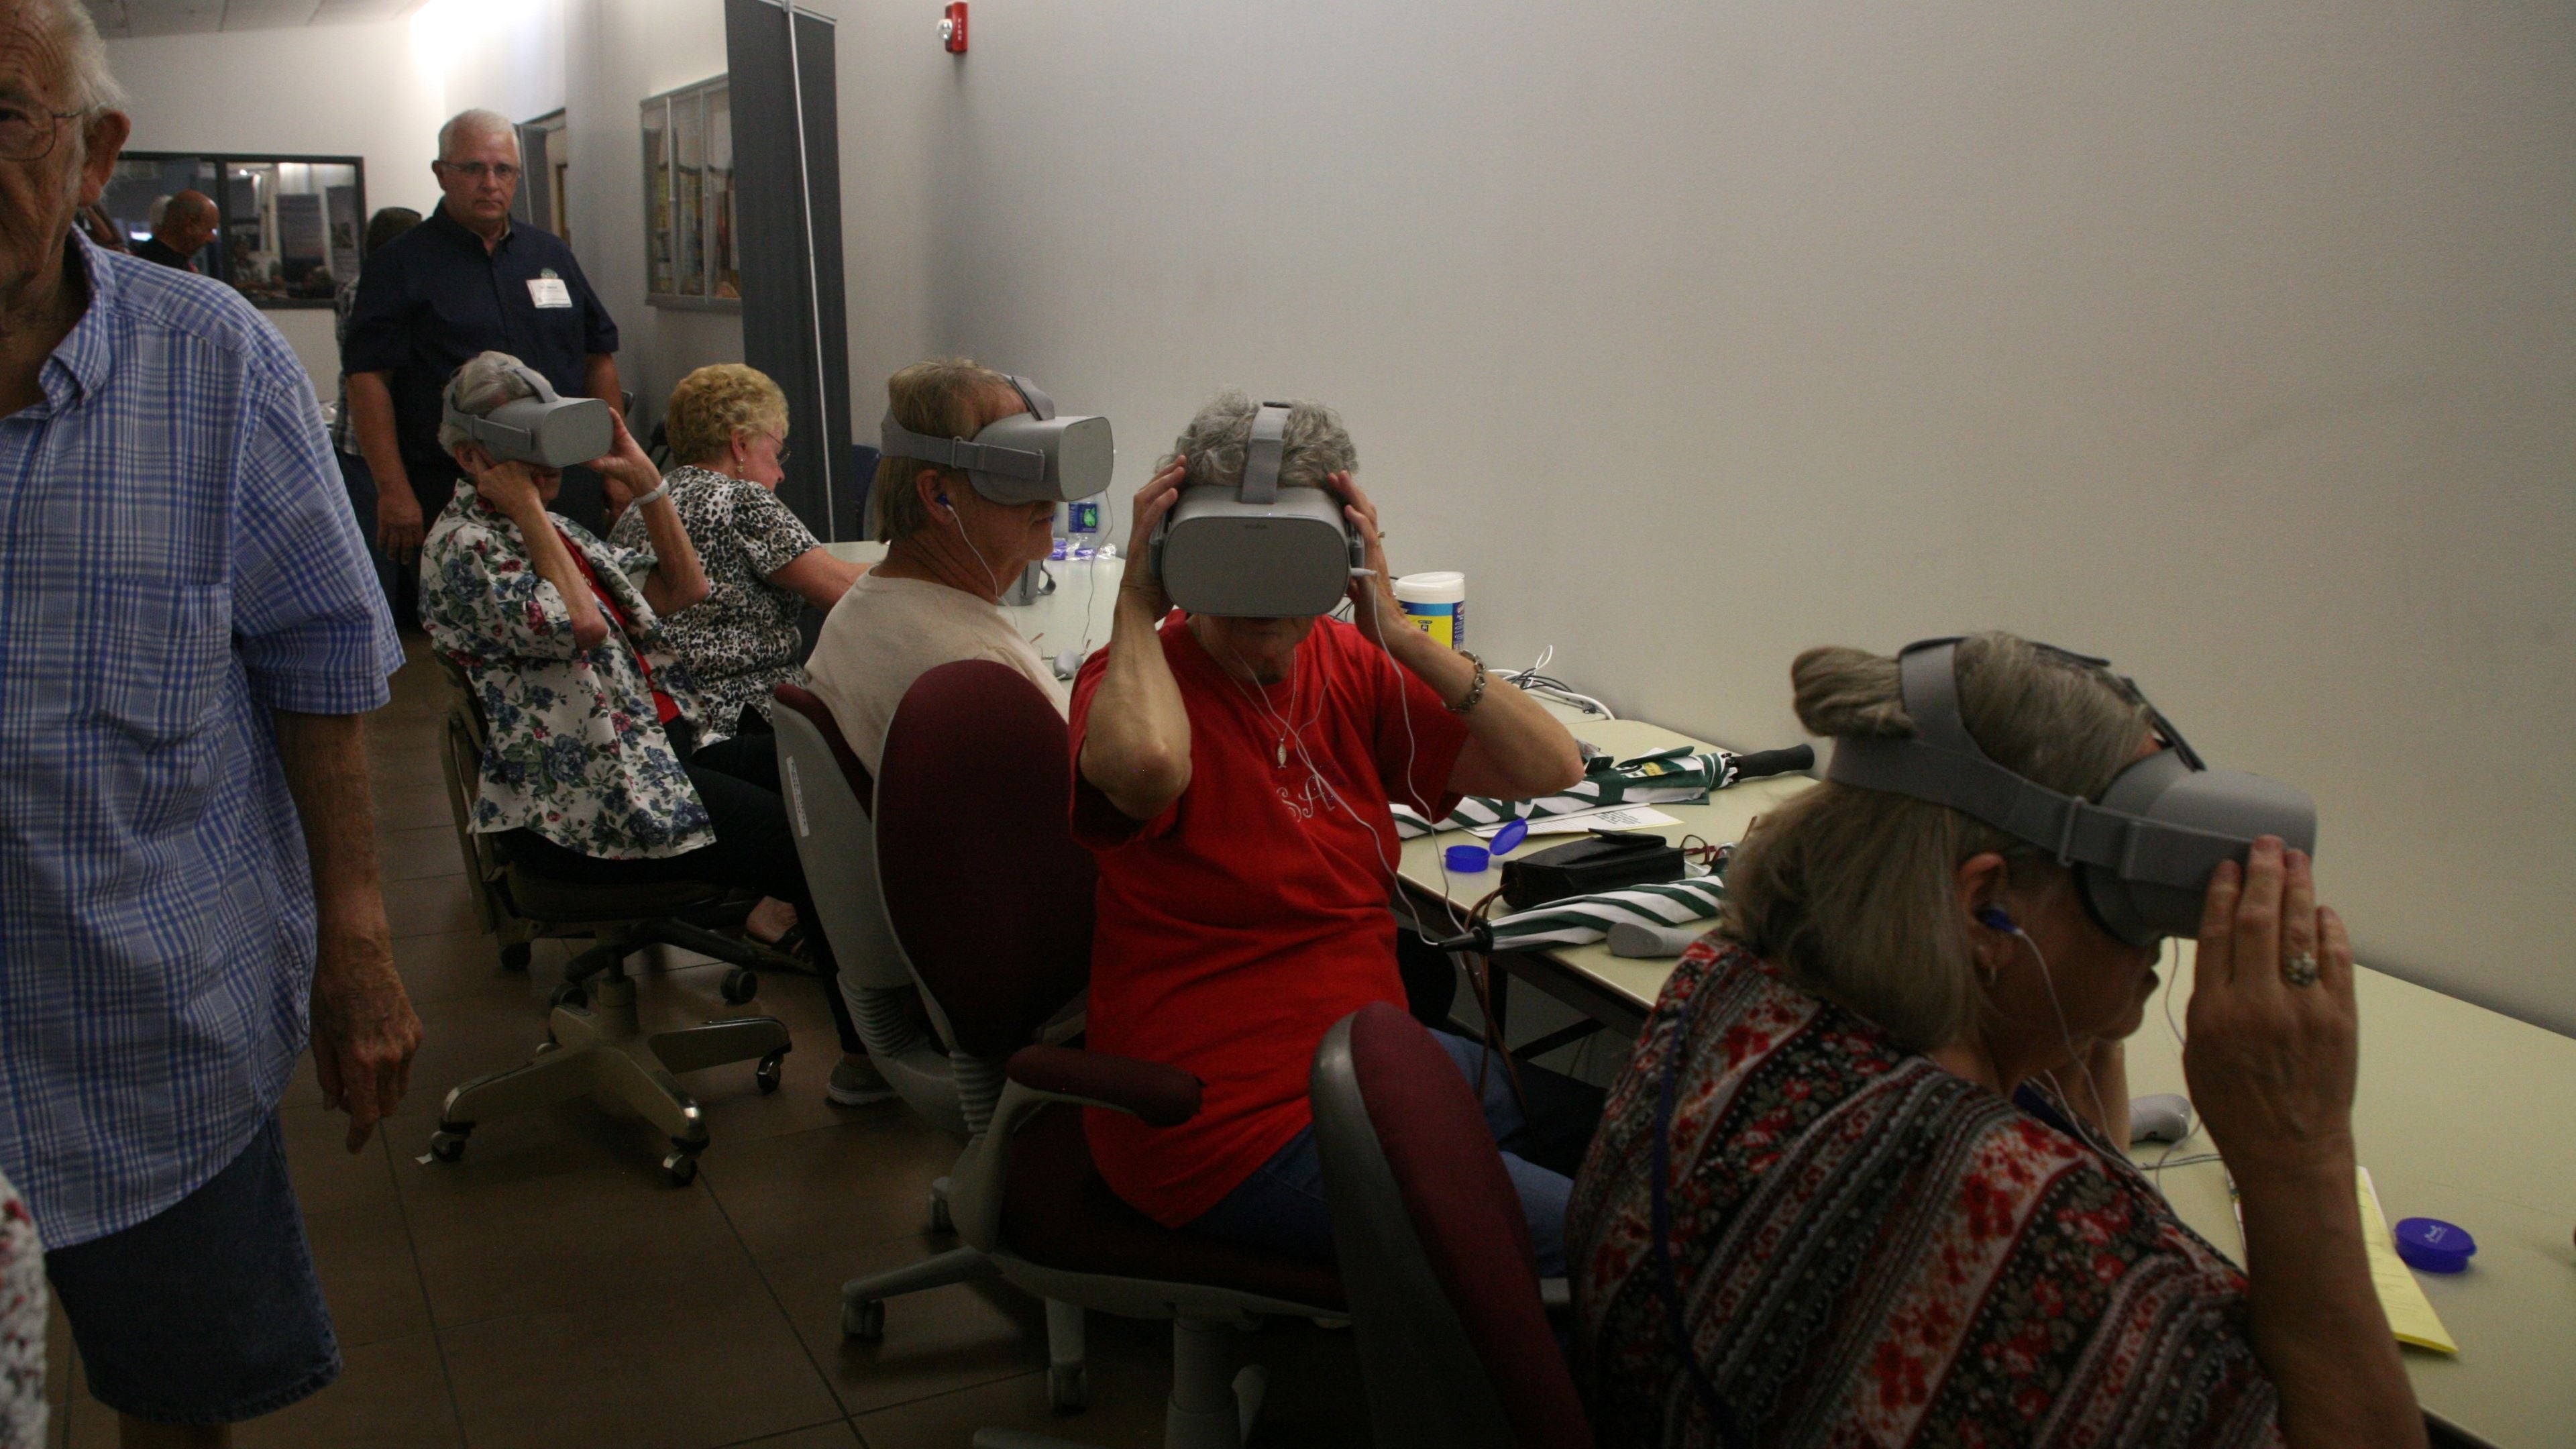 AECI's virtual reality goggles